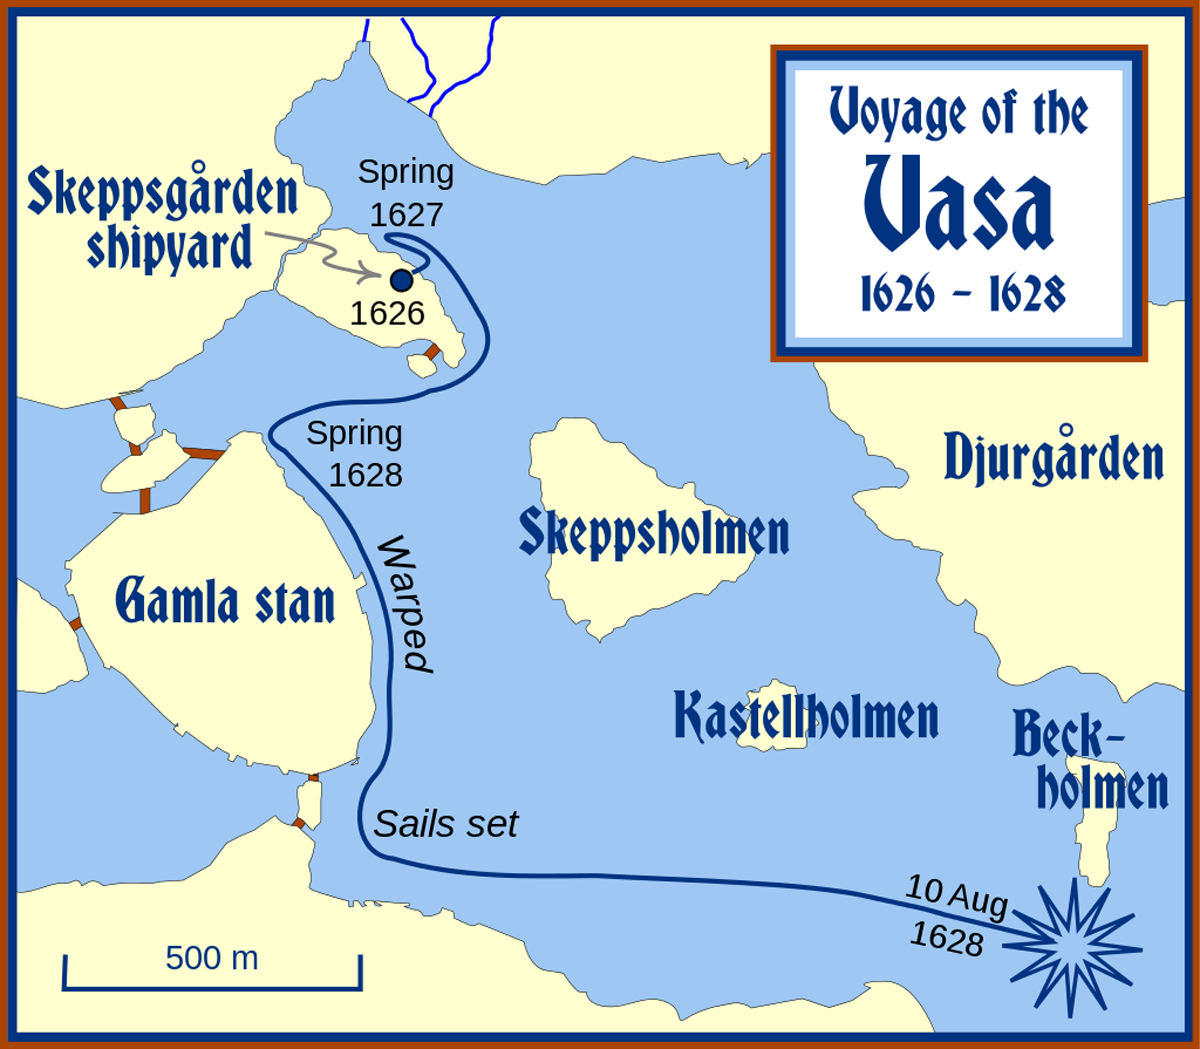 Место где затонул корабль Васа